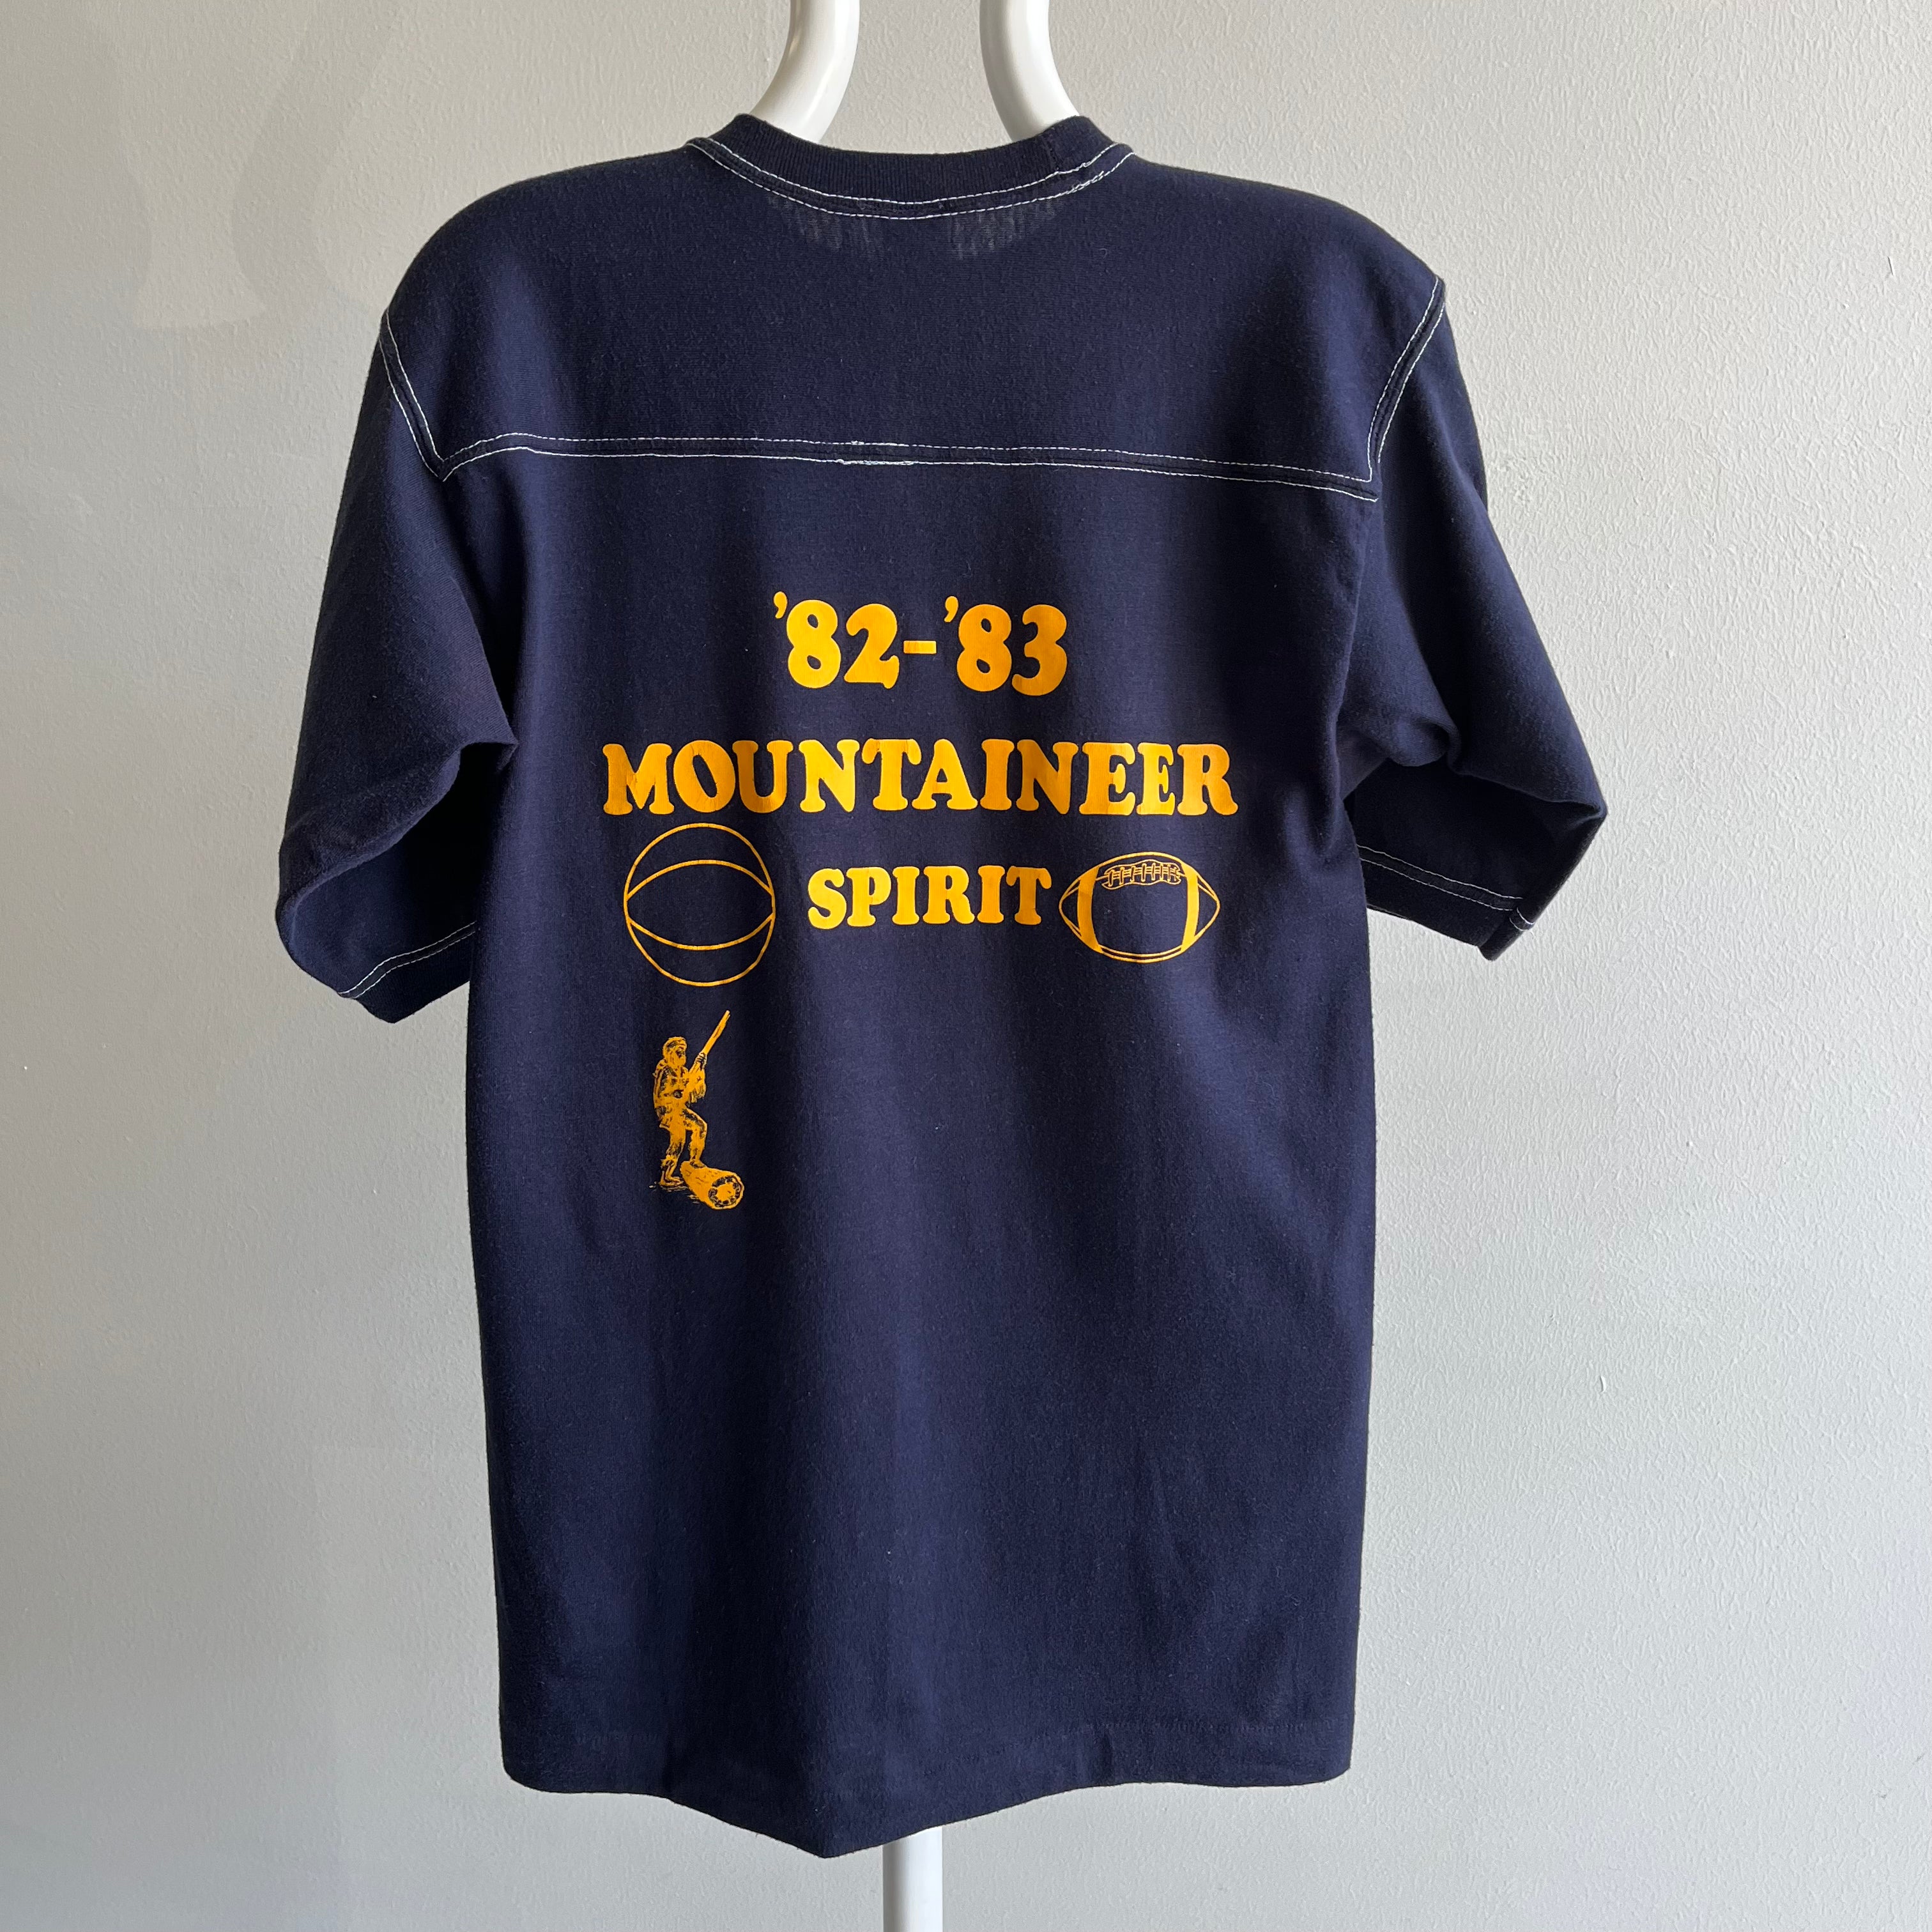 1982 - 83 West Virginia Mountaineer Spirit Barely Worn Football Tee - WOW